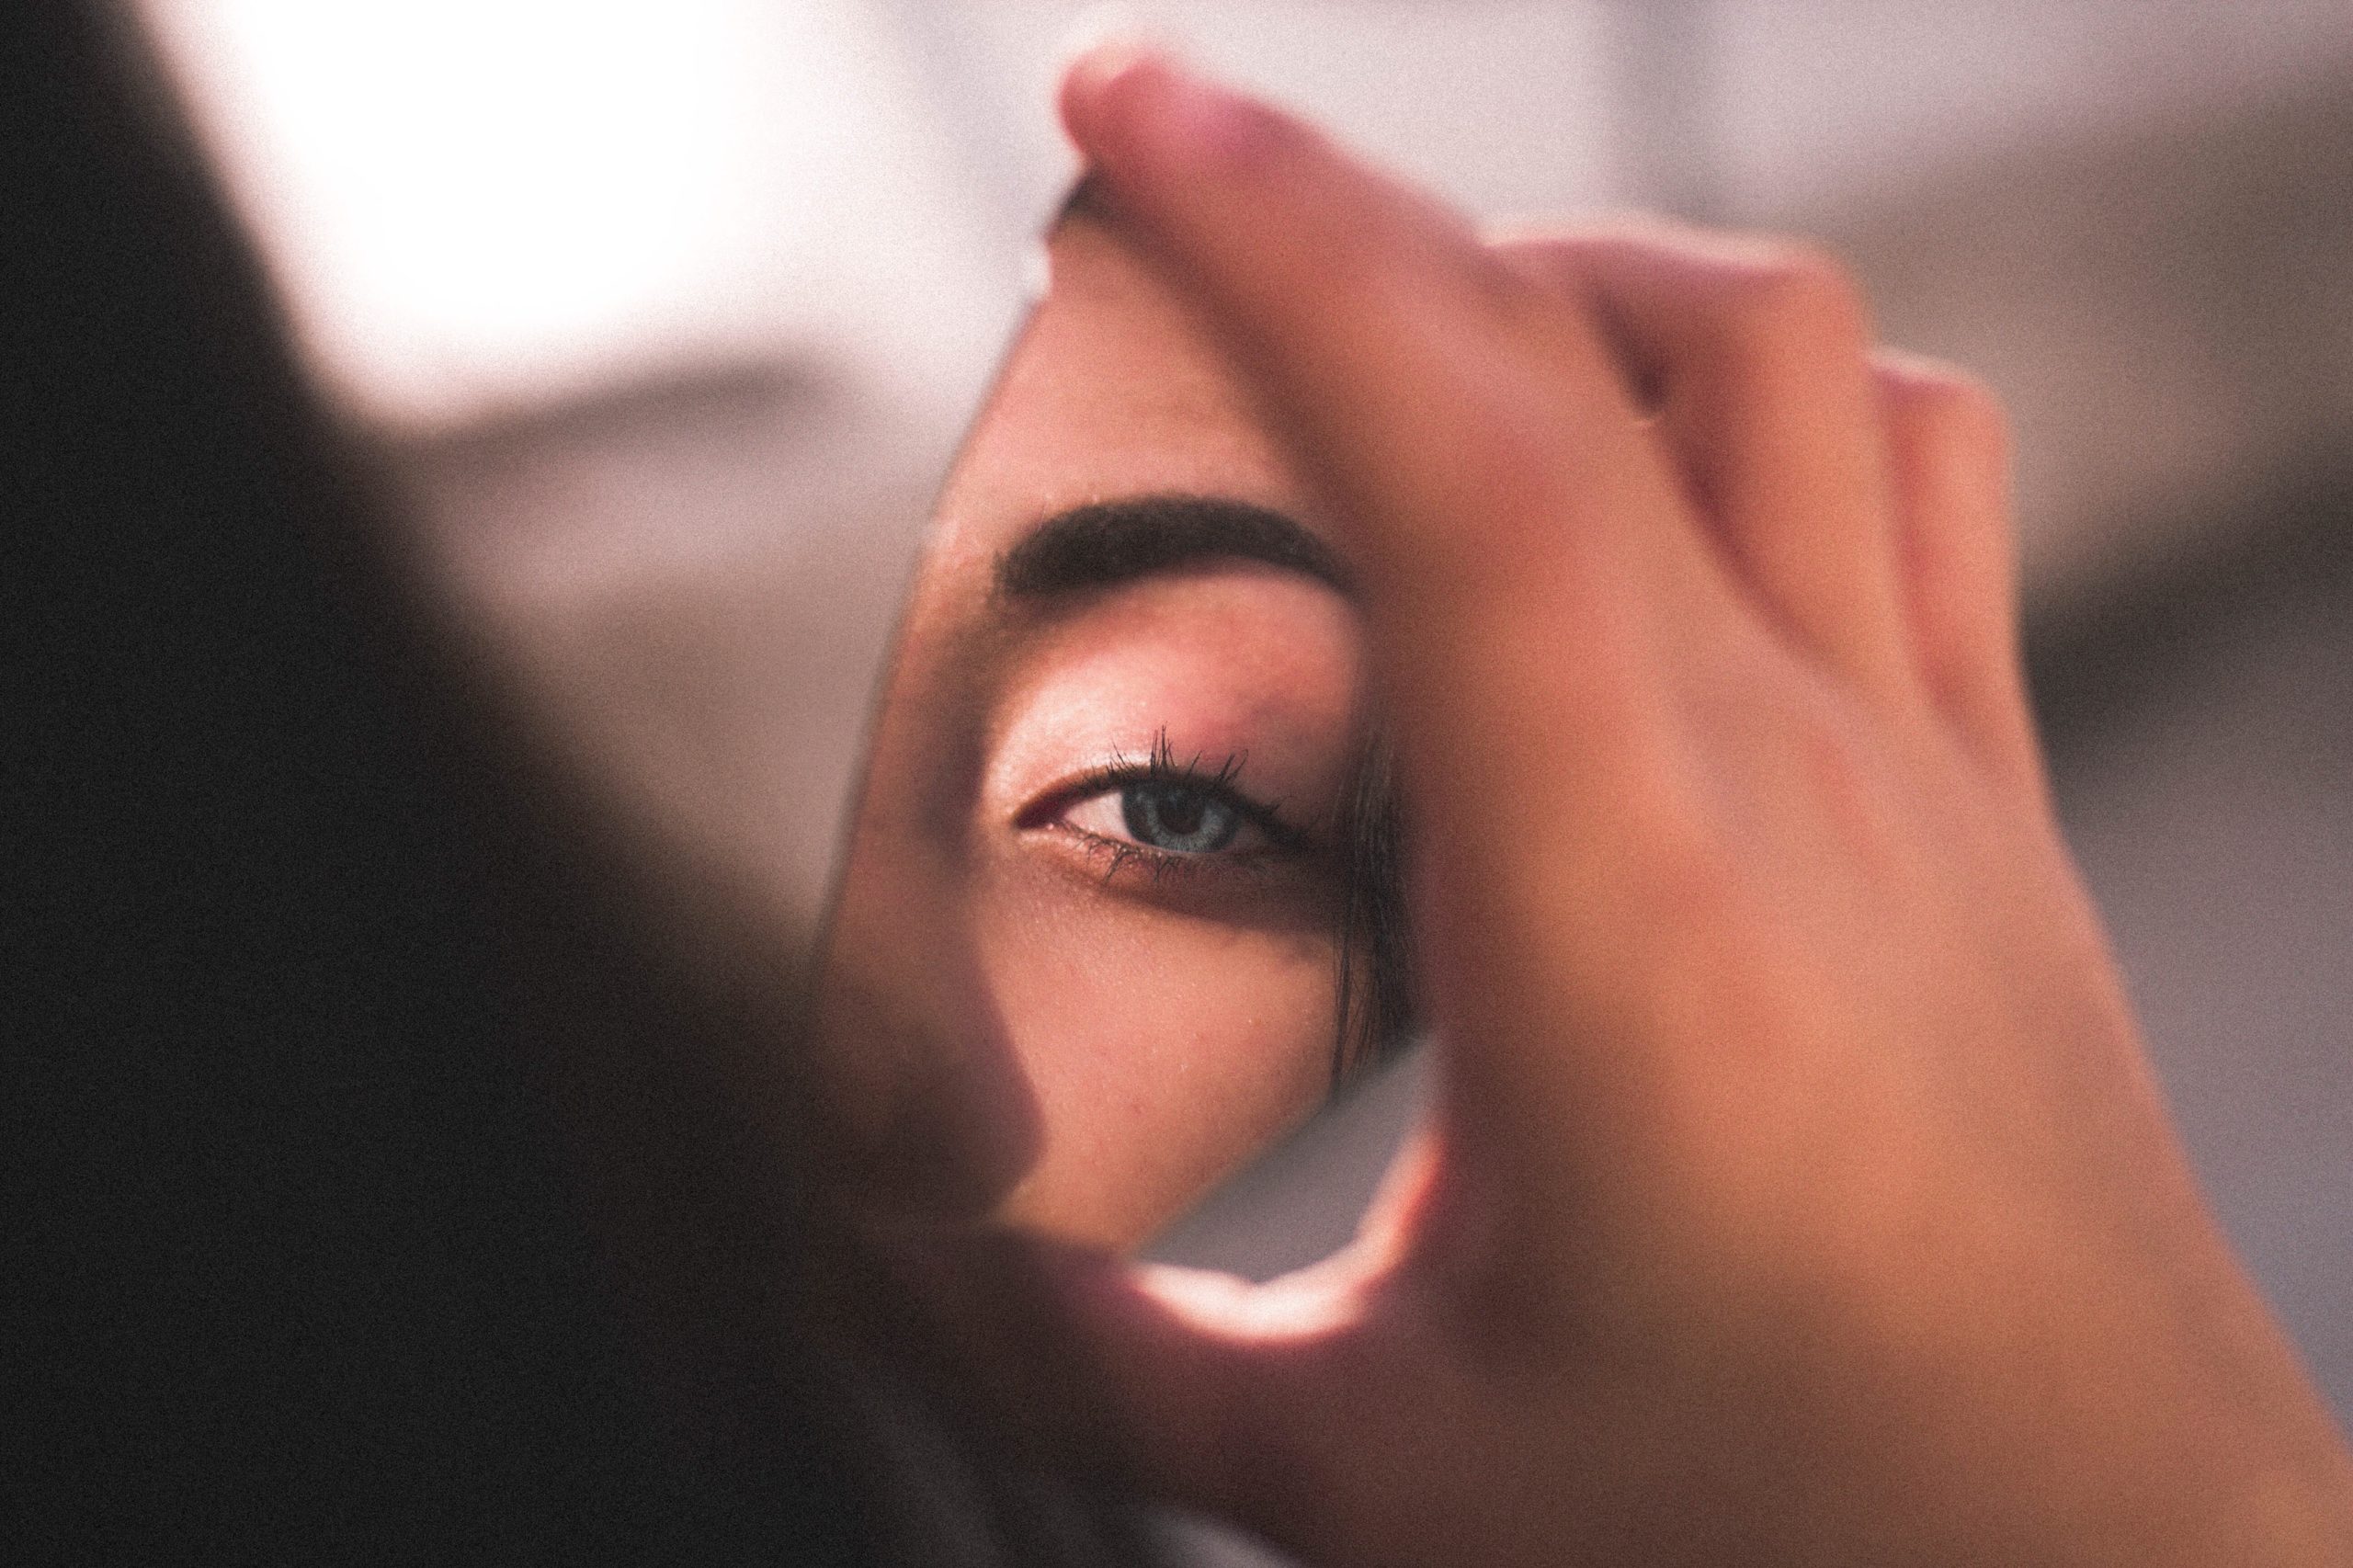 Reflection of a woman's eye in a broken mirror